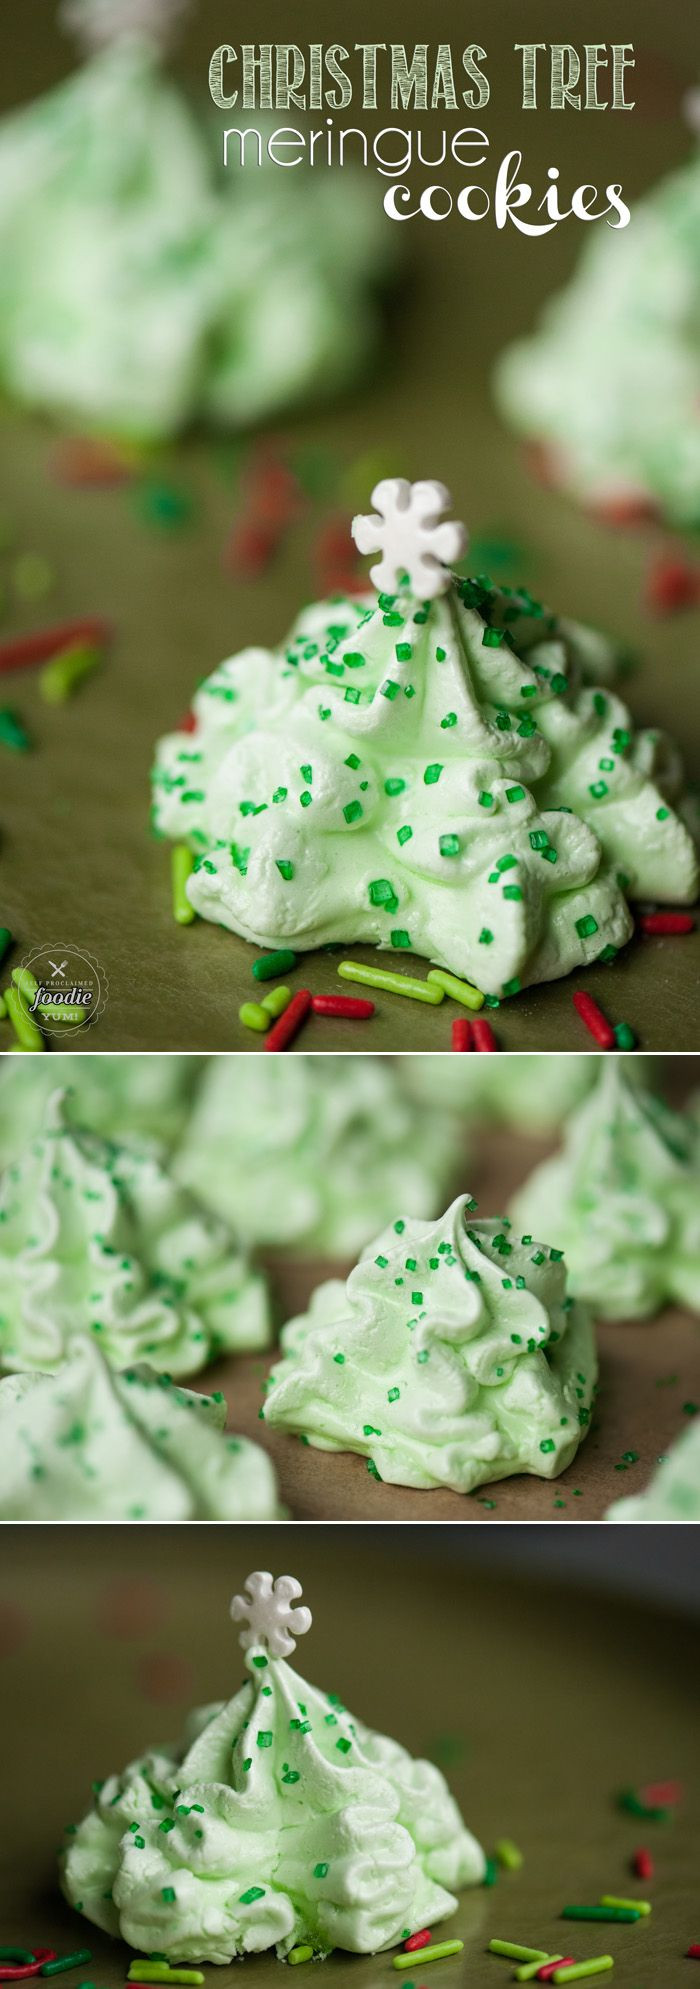 Christmas Tree Meringue Cookies
 Best 25 Christmas sweets ideas on Pinterest